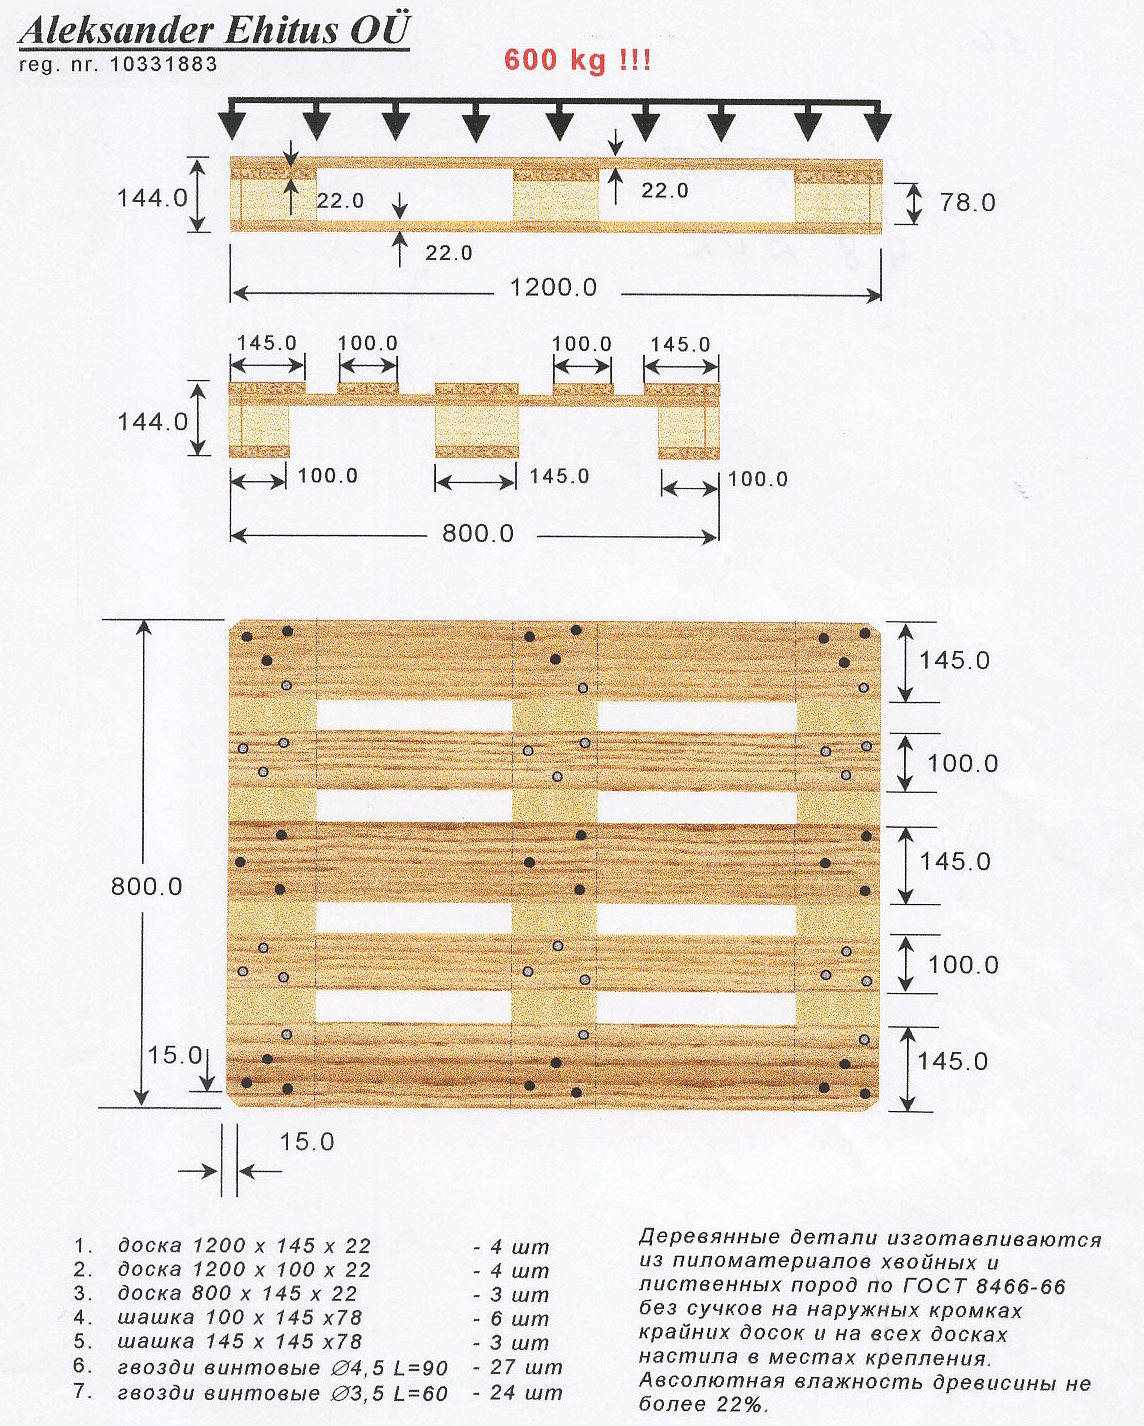 Used Wooden Pallets, UK Standard Sized Pallets - Associated Pallets